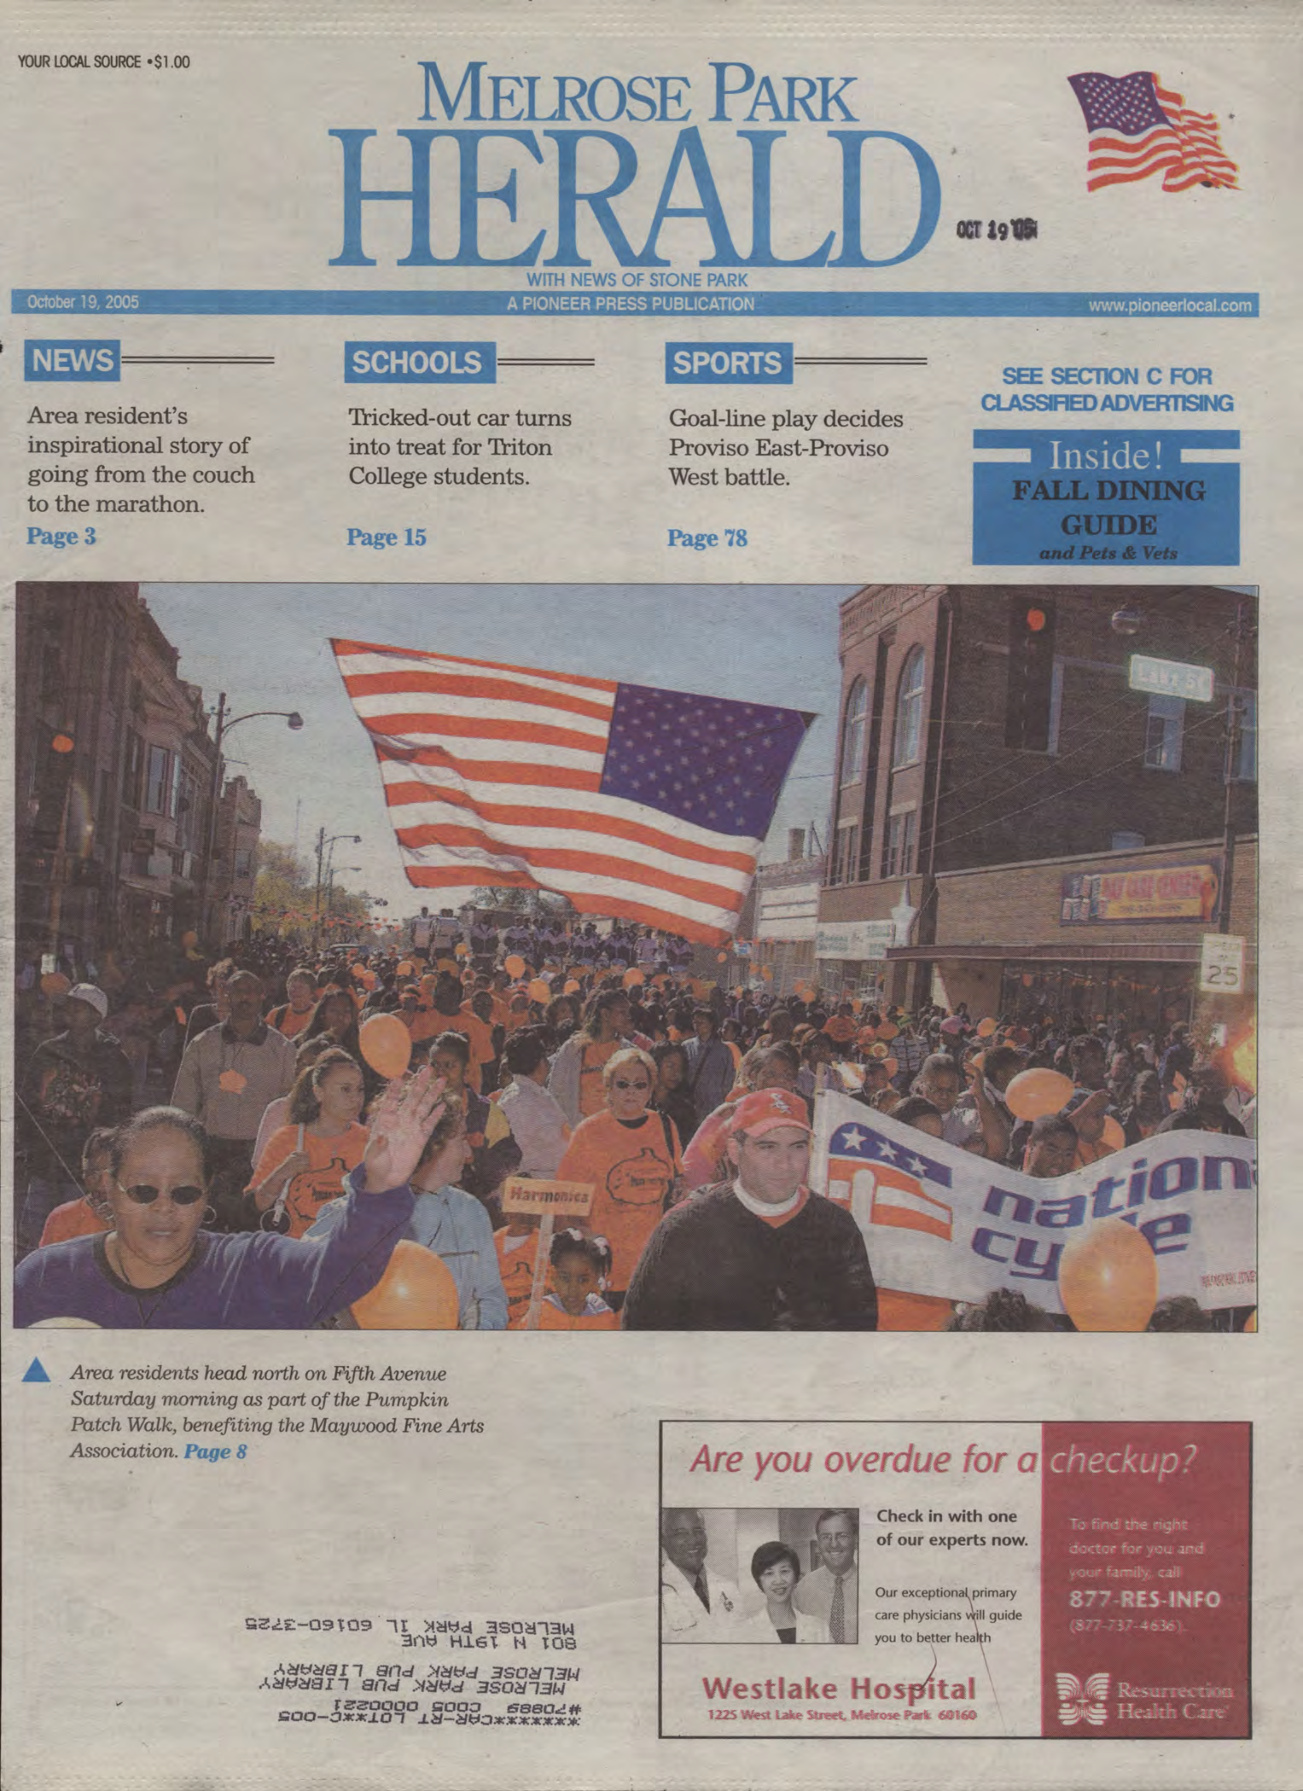 The Herald – 20051019